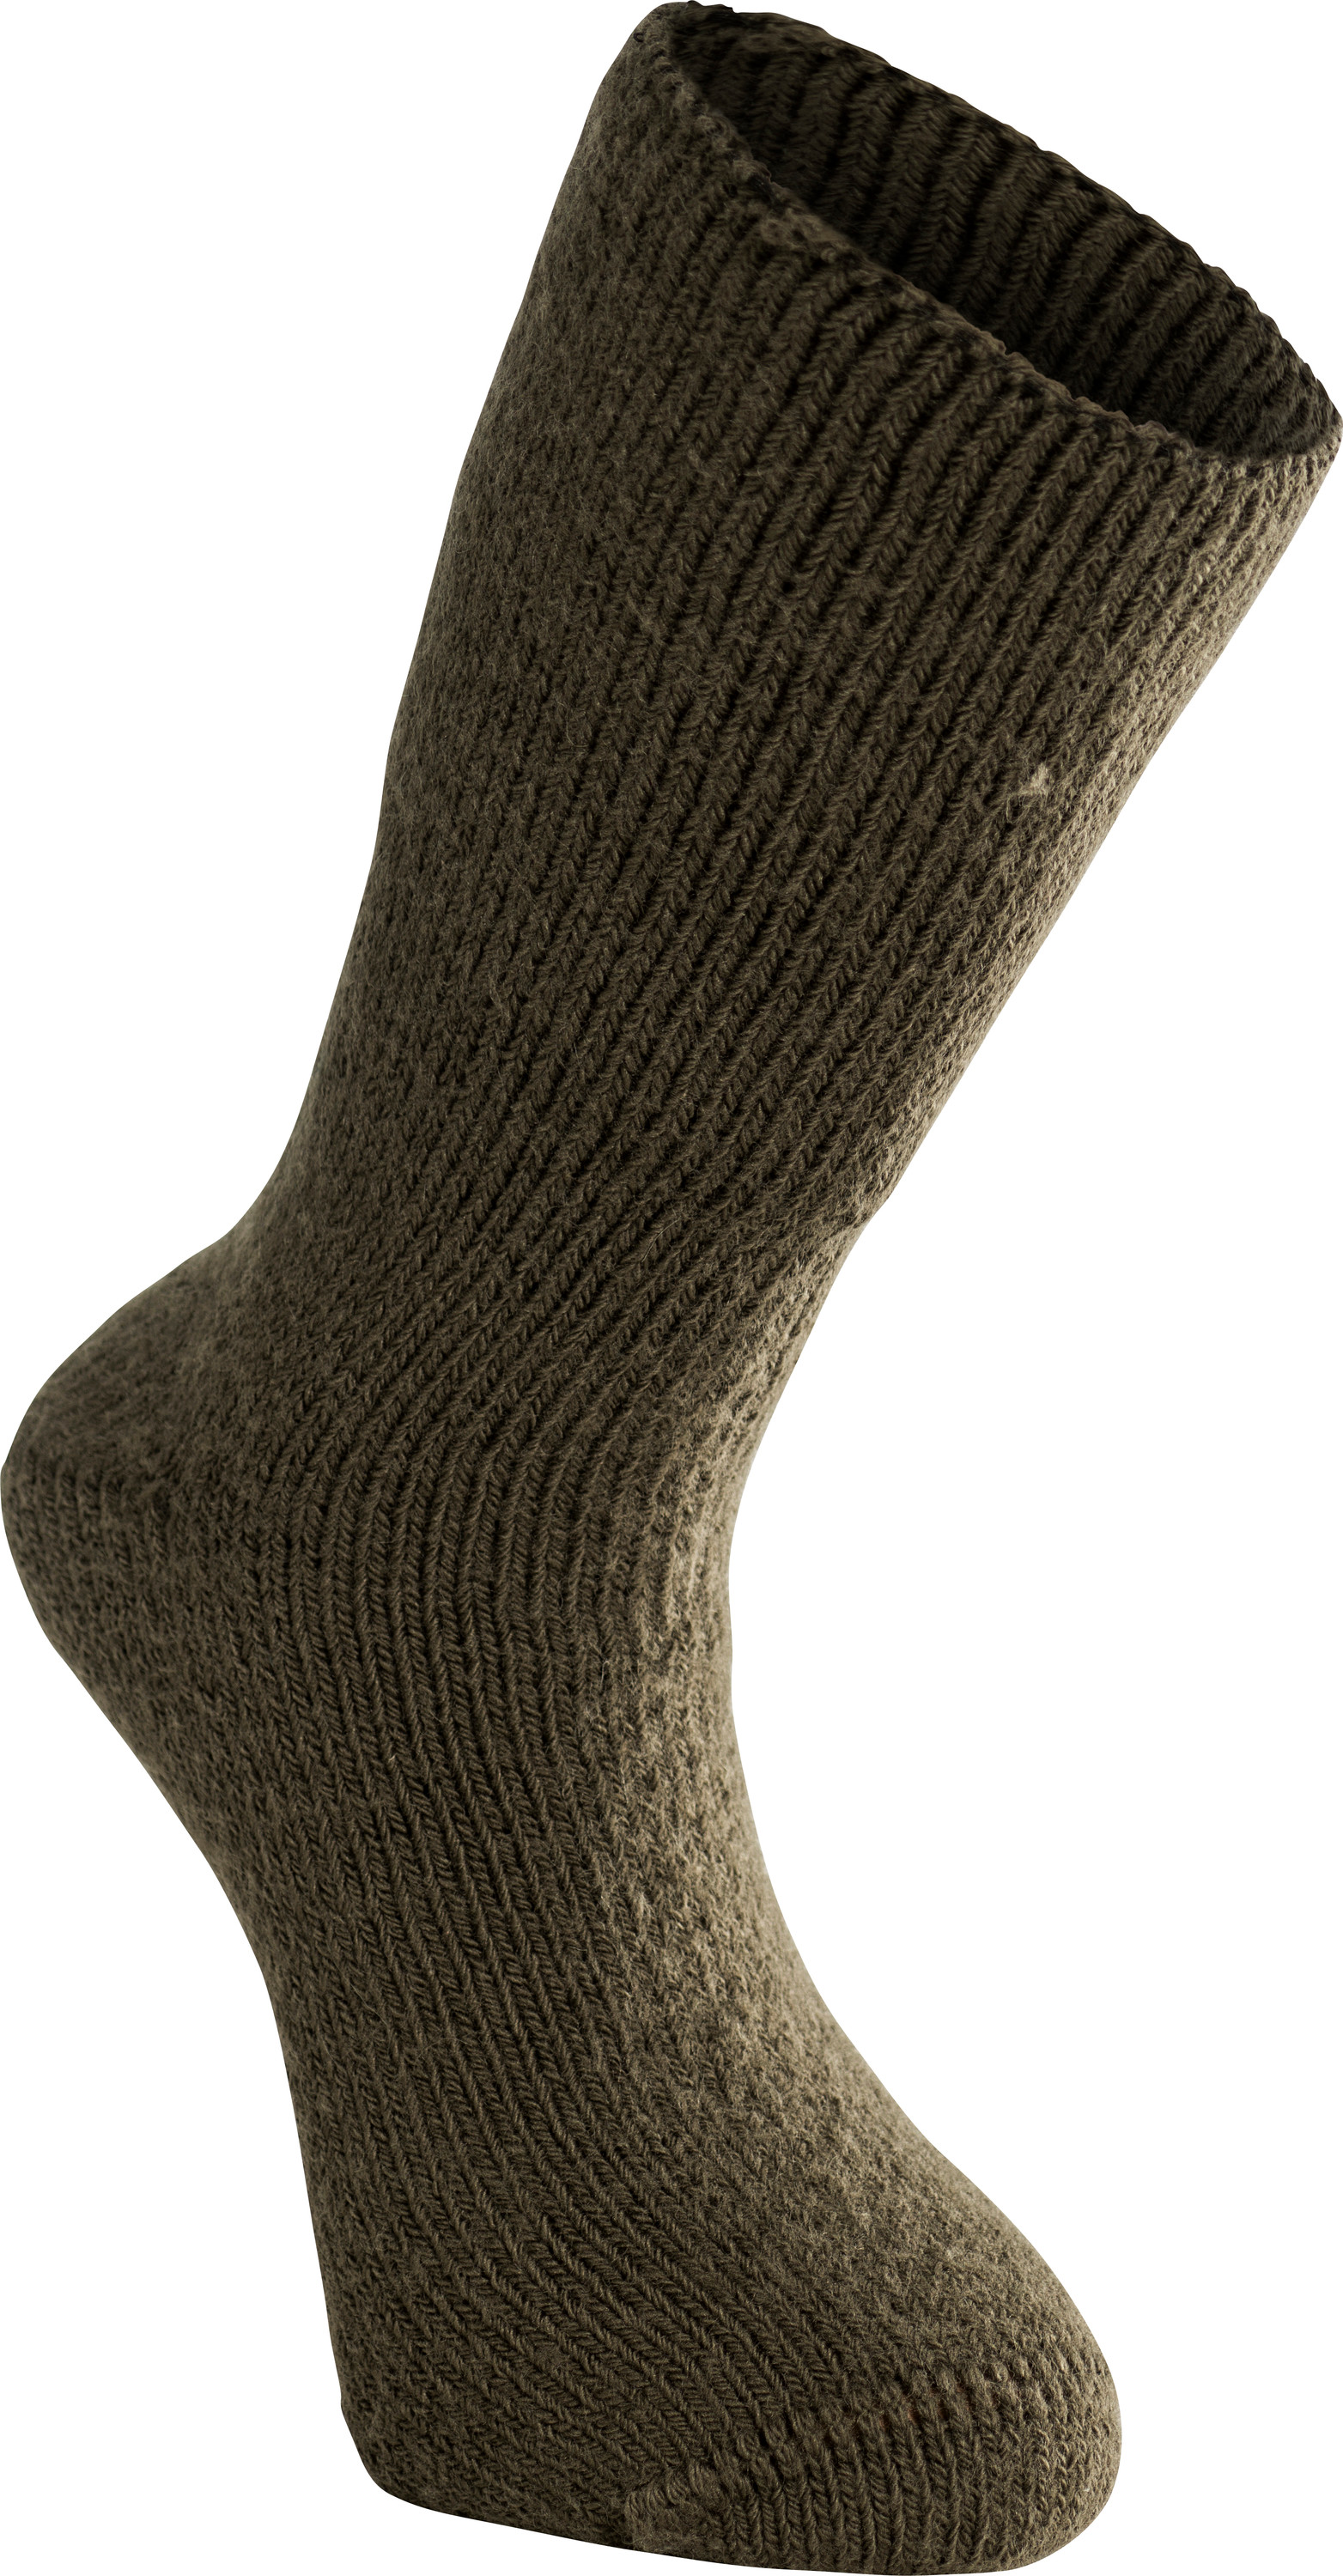 Socks 600